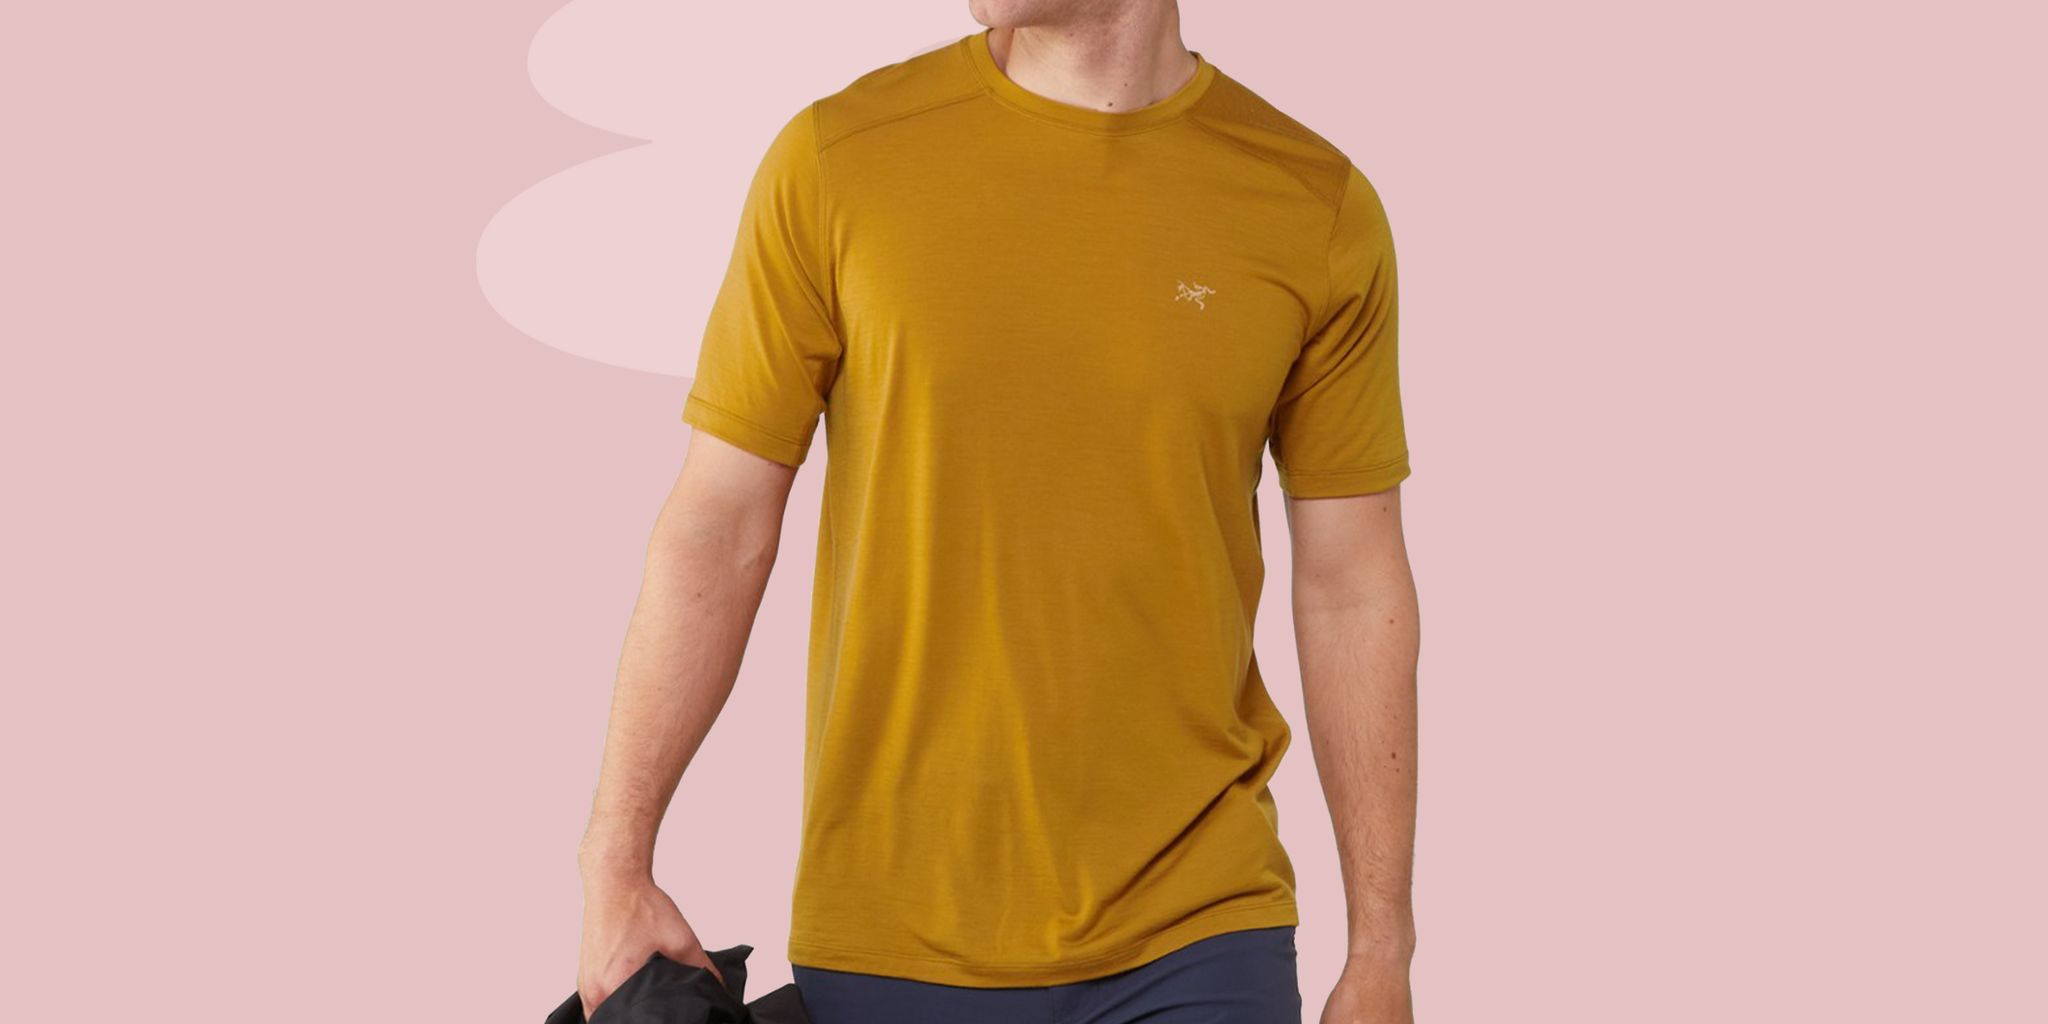 a man wearing a yellow shirt